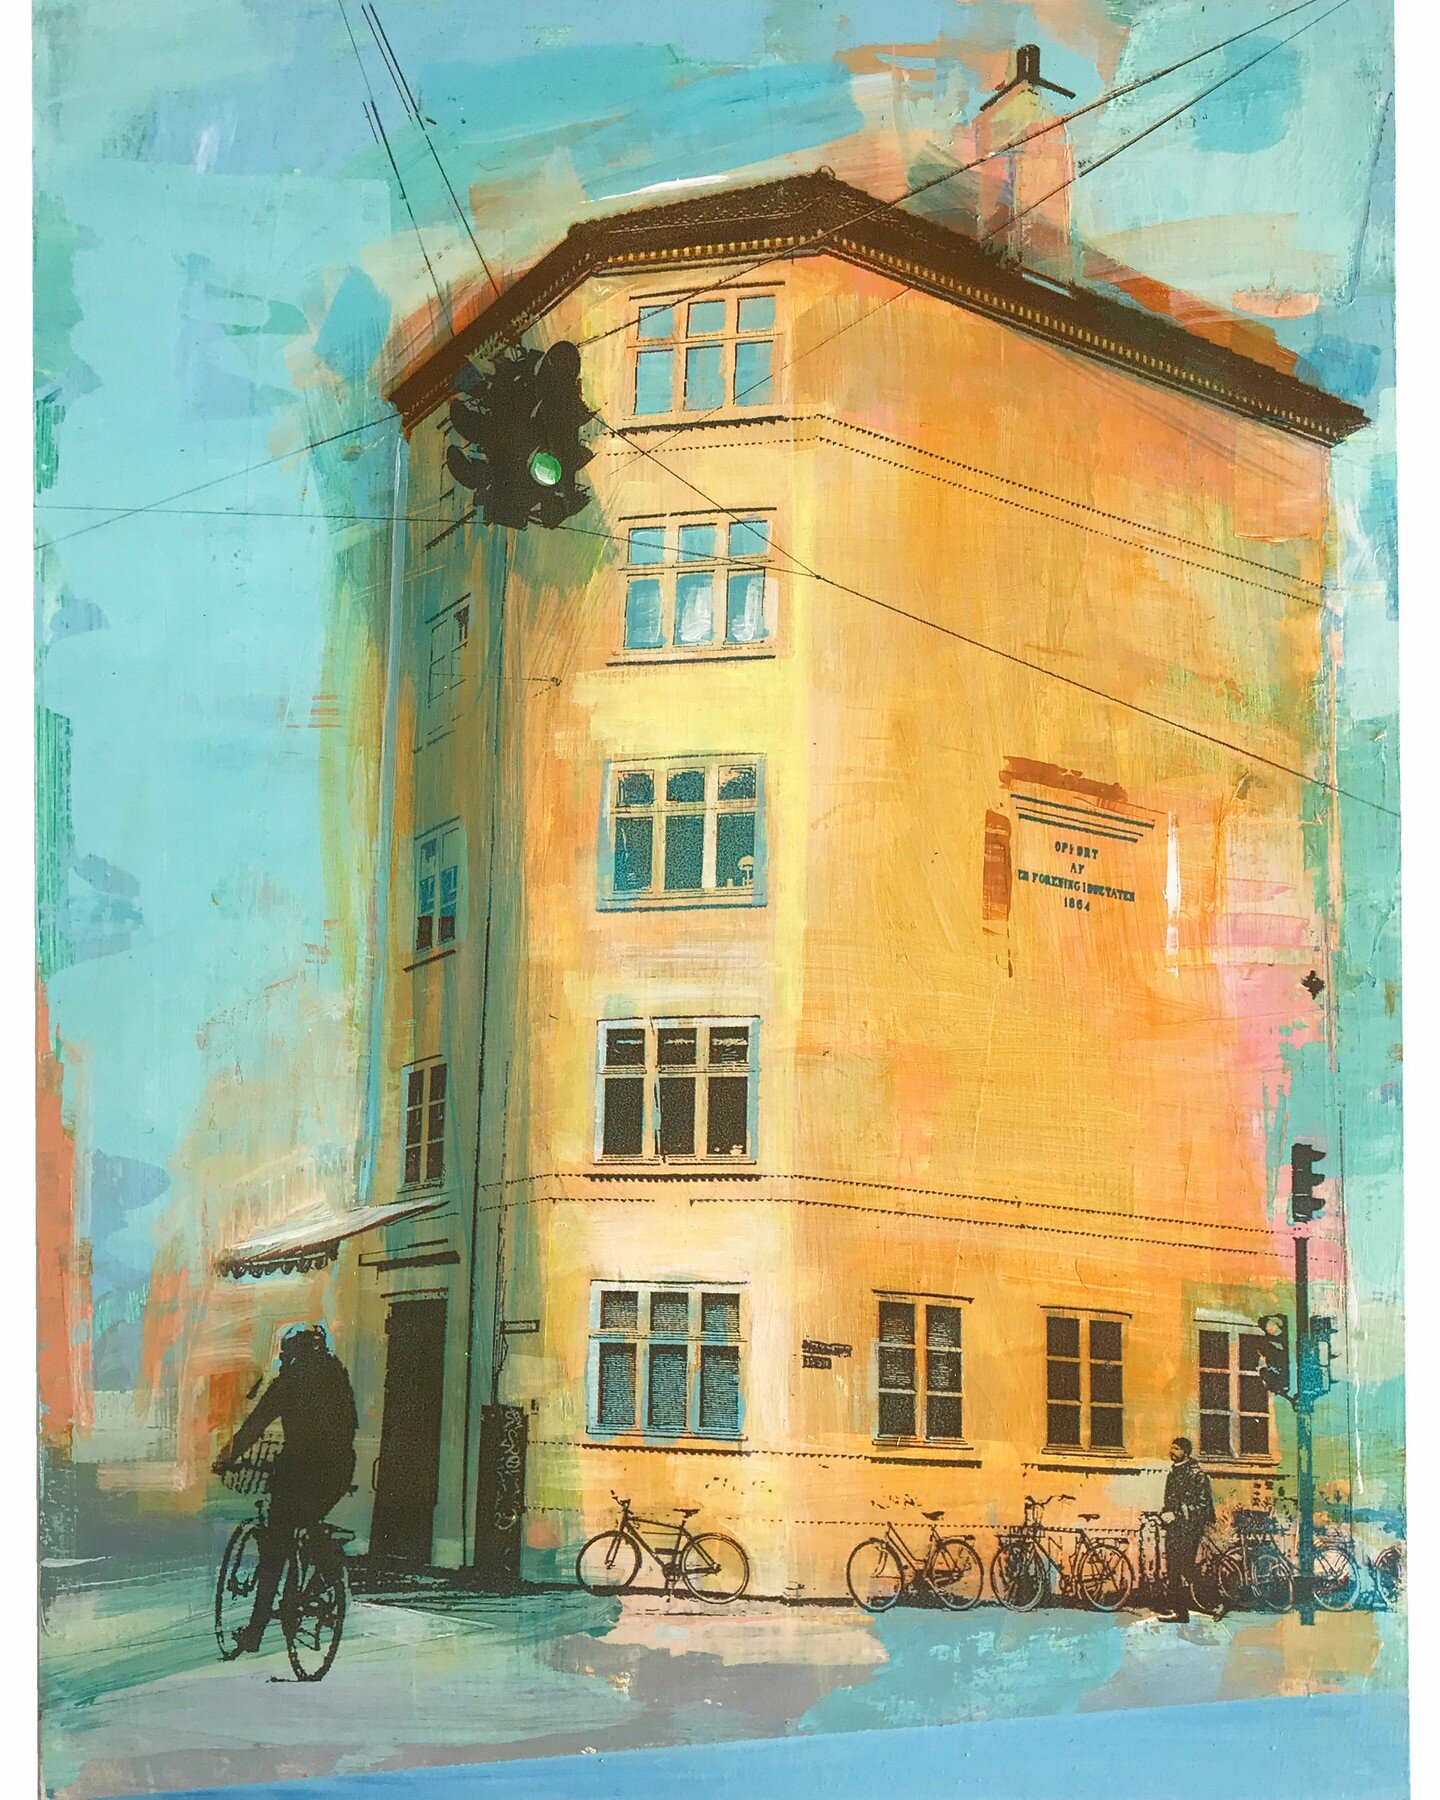 Copenhagen, acrylic and print on wooden panel
#colour #atmosphere #painting #screenprint #copenhagen